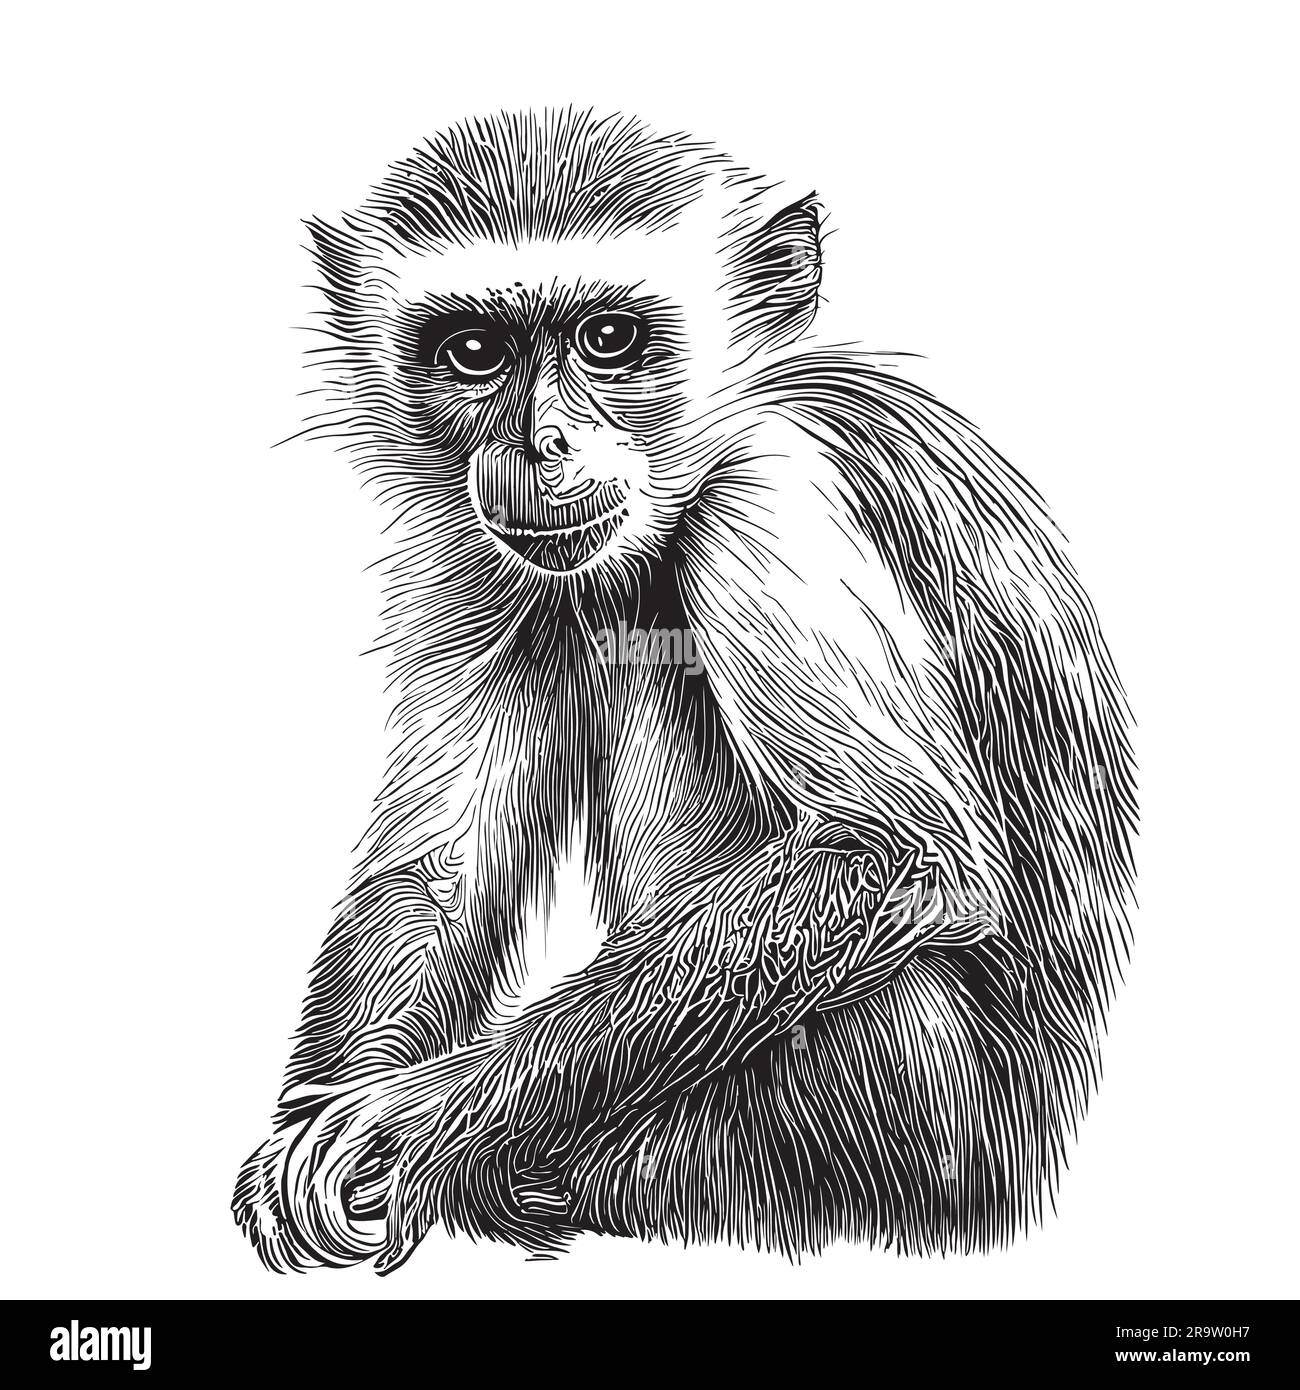 17,706 Monkey Sketch Images, Stock Photos & Vectors | Shutterstock